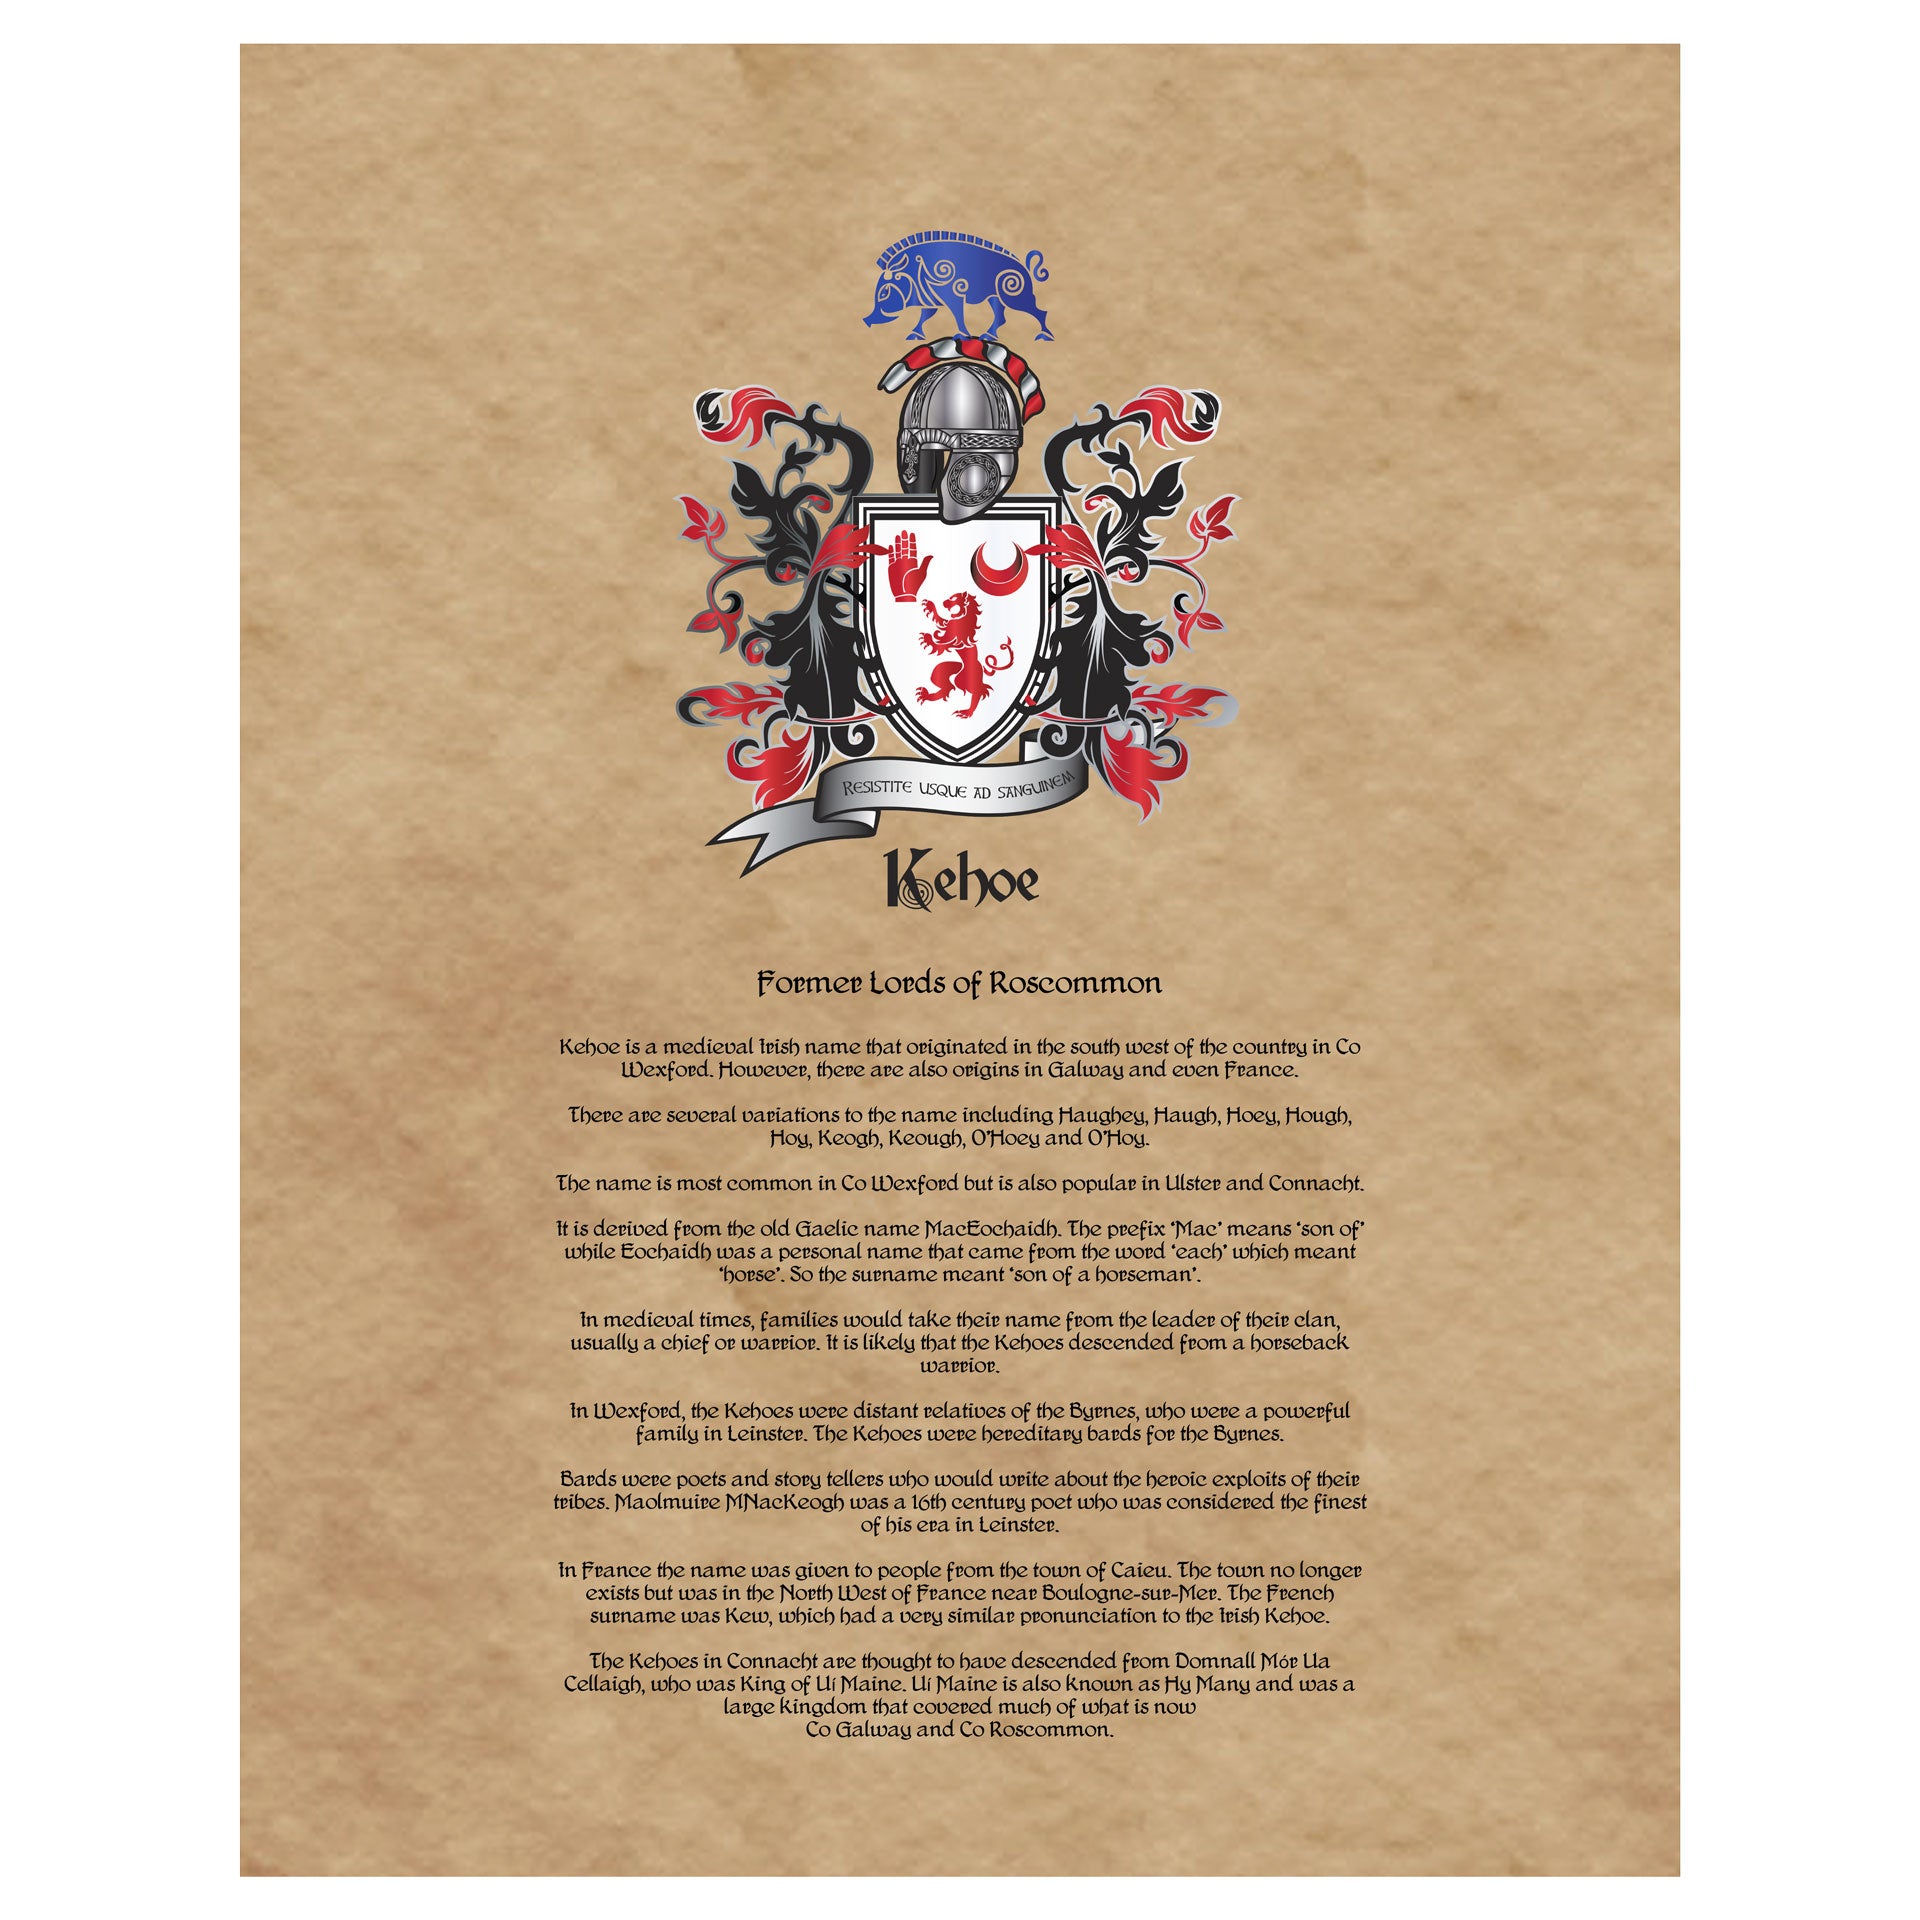 Kehoe Coat of Arms Premium Luster Unframed Print